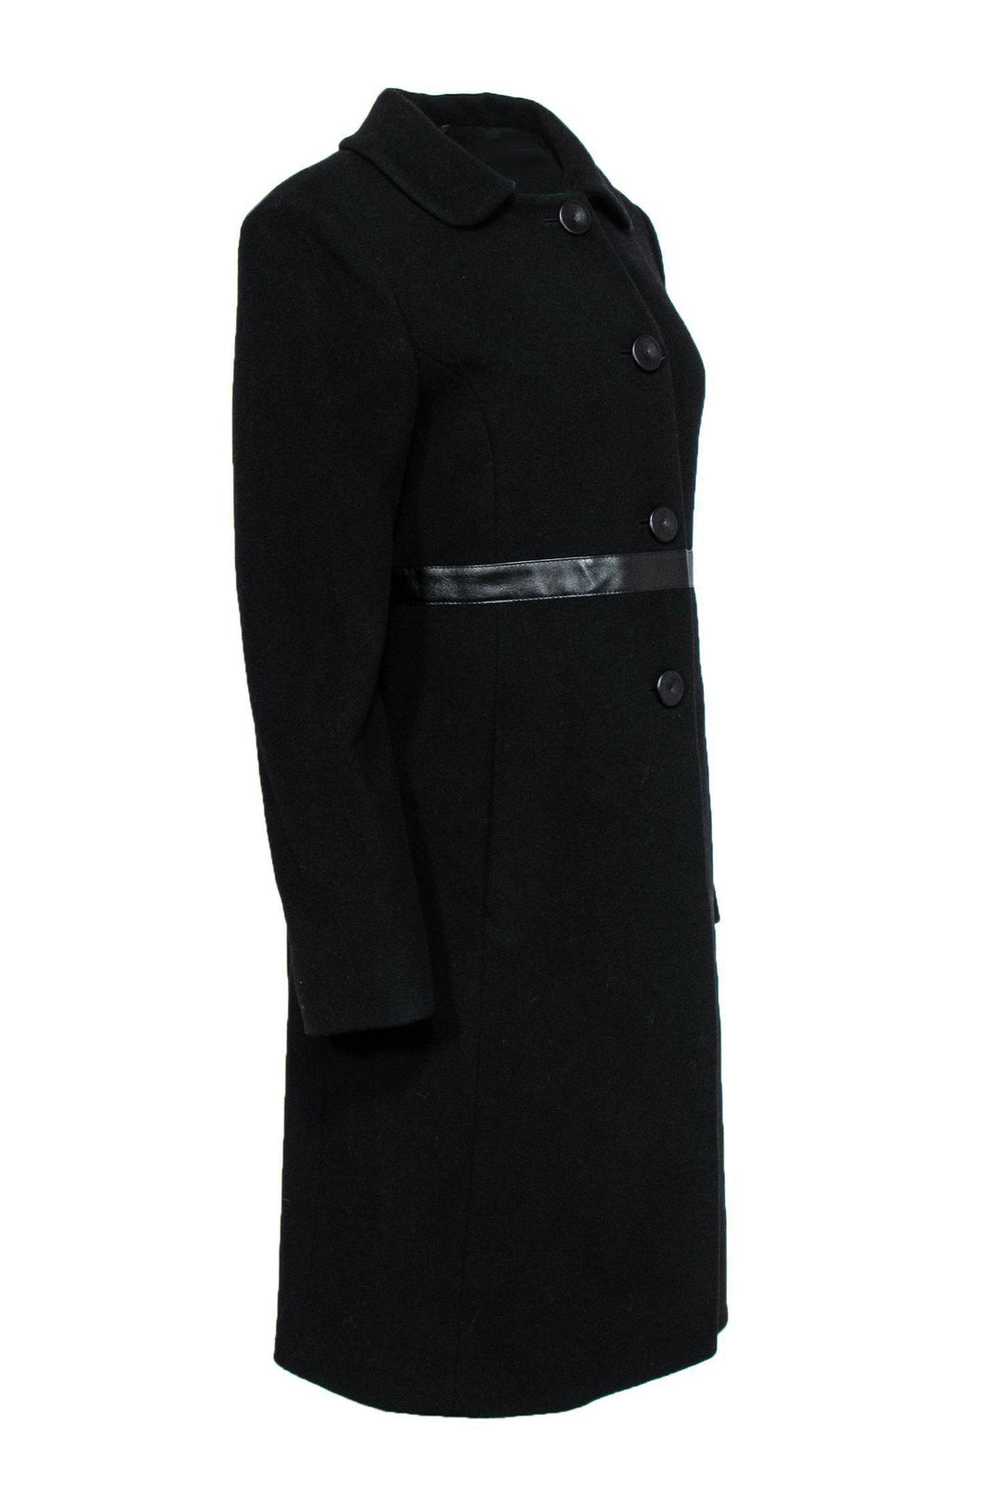 Cinzia Rocca - Black Wool Overcoat w/ Leather Tri… - image 2